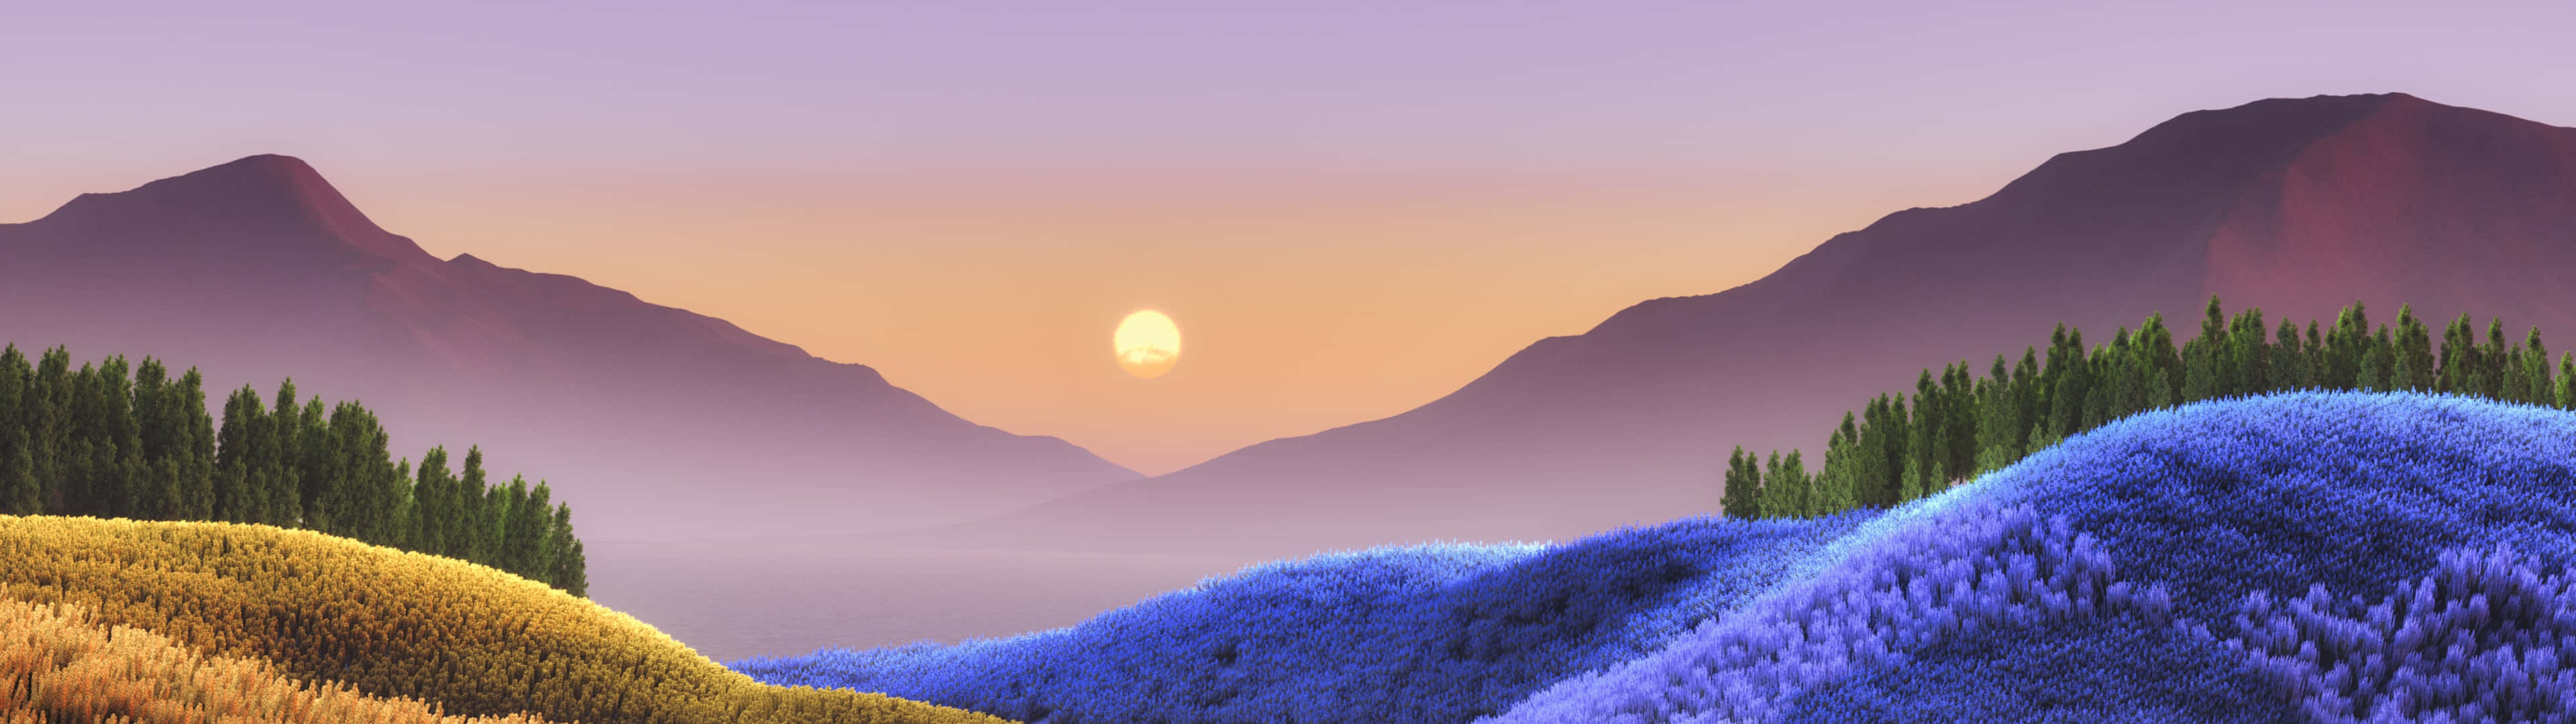 Serene Mountain Landscape Dual Screen Wallpaper